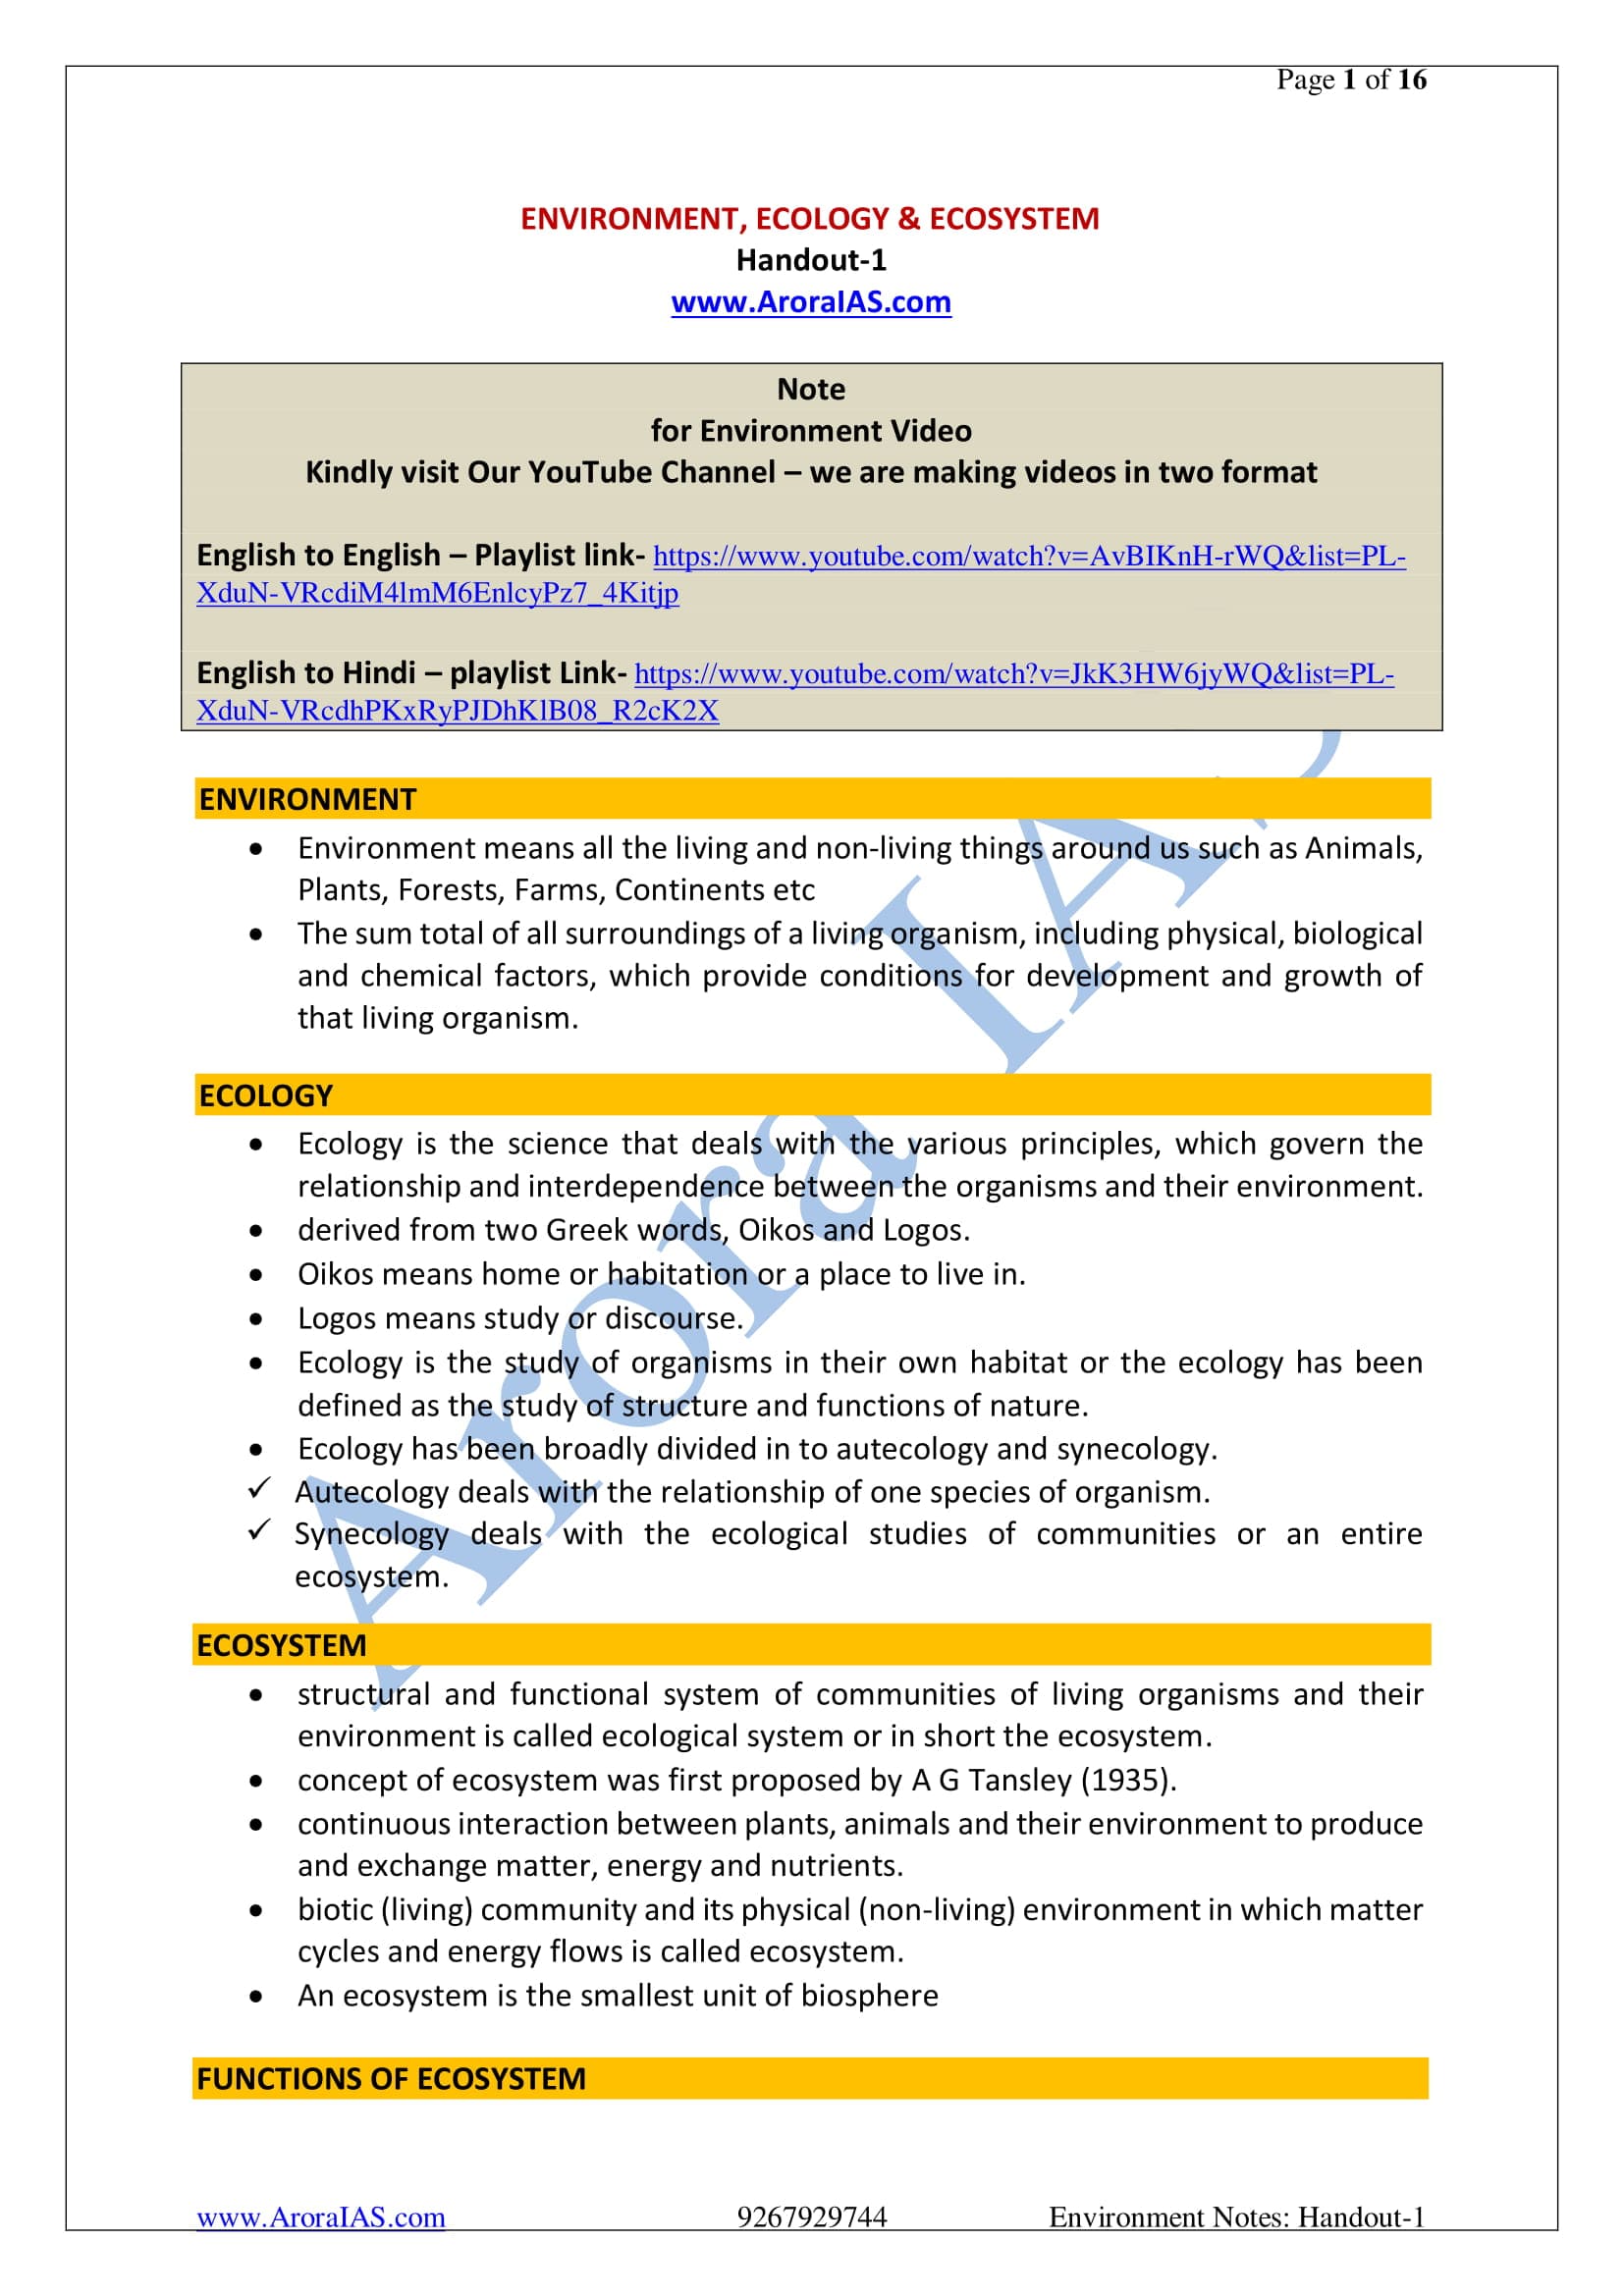 ENVIRONMENT, ECOLOGY & ECOSYSTEM Notes ( Handout-1) for UPSC/IAS or other  Exam – Arora IAS